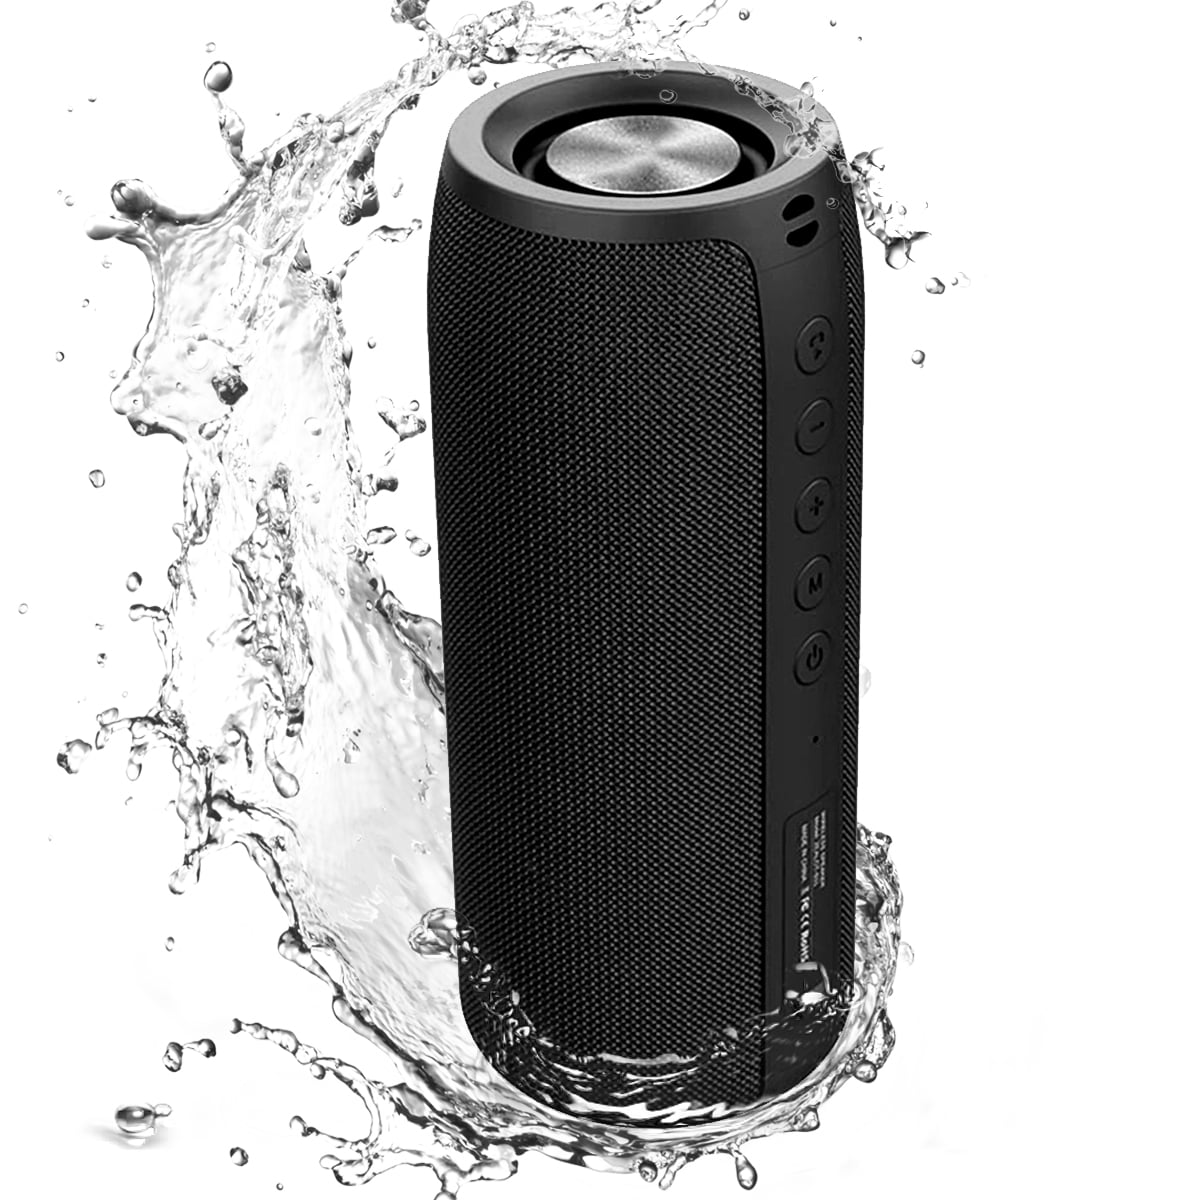 Aursear Waterproof Bluetooth Speaker, Portable Outdoor Wireless Speaker with Loud Stereo Sound, 30H Playtime,Black - image 1 of 9